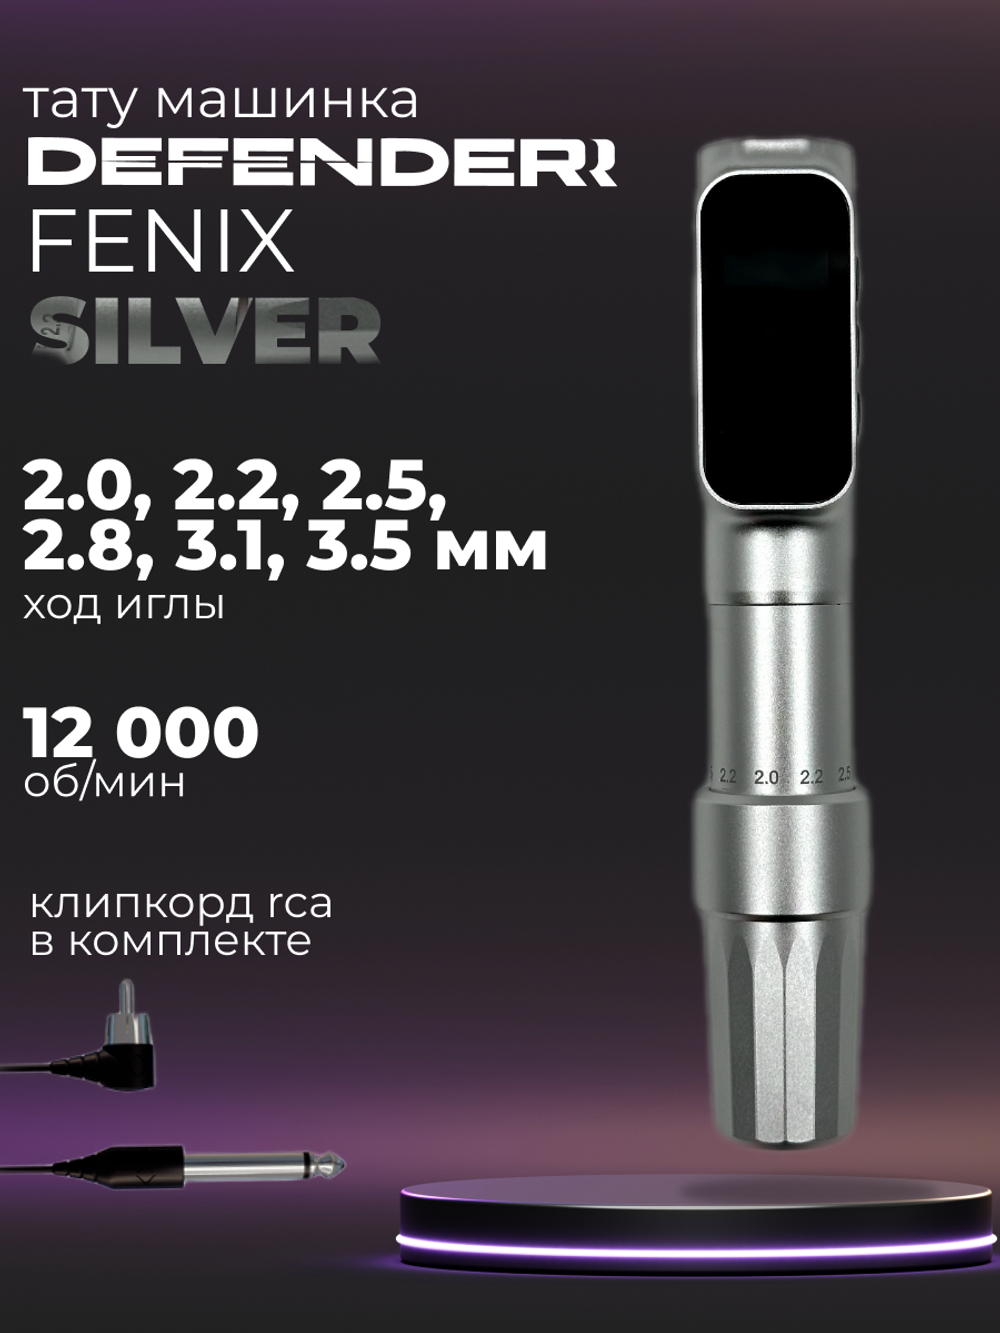 Defender Fenix S Silver машинка для татуажа